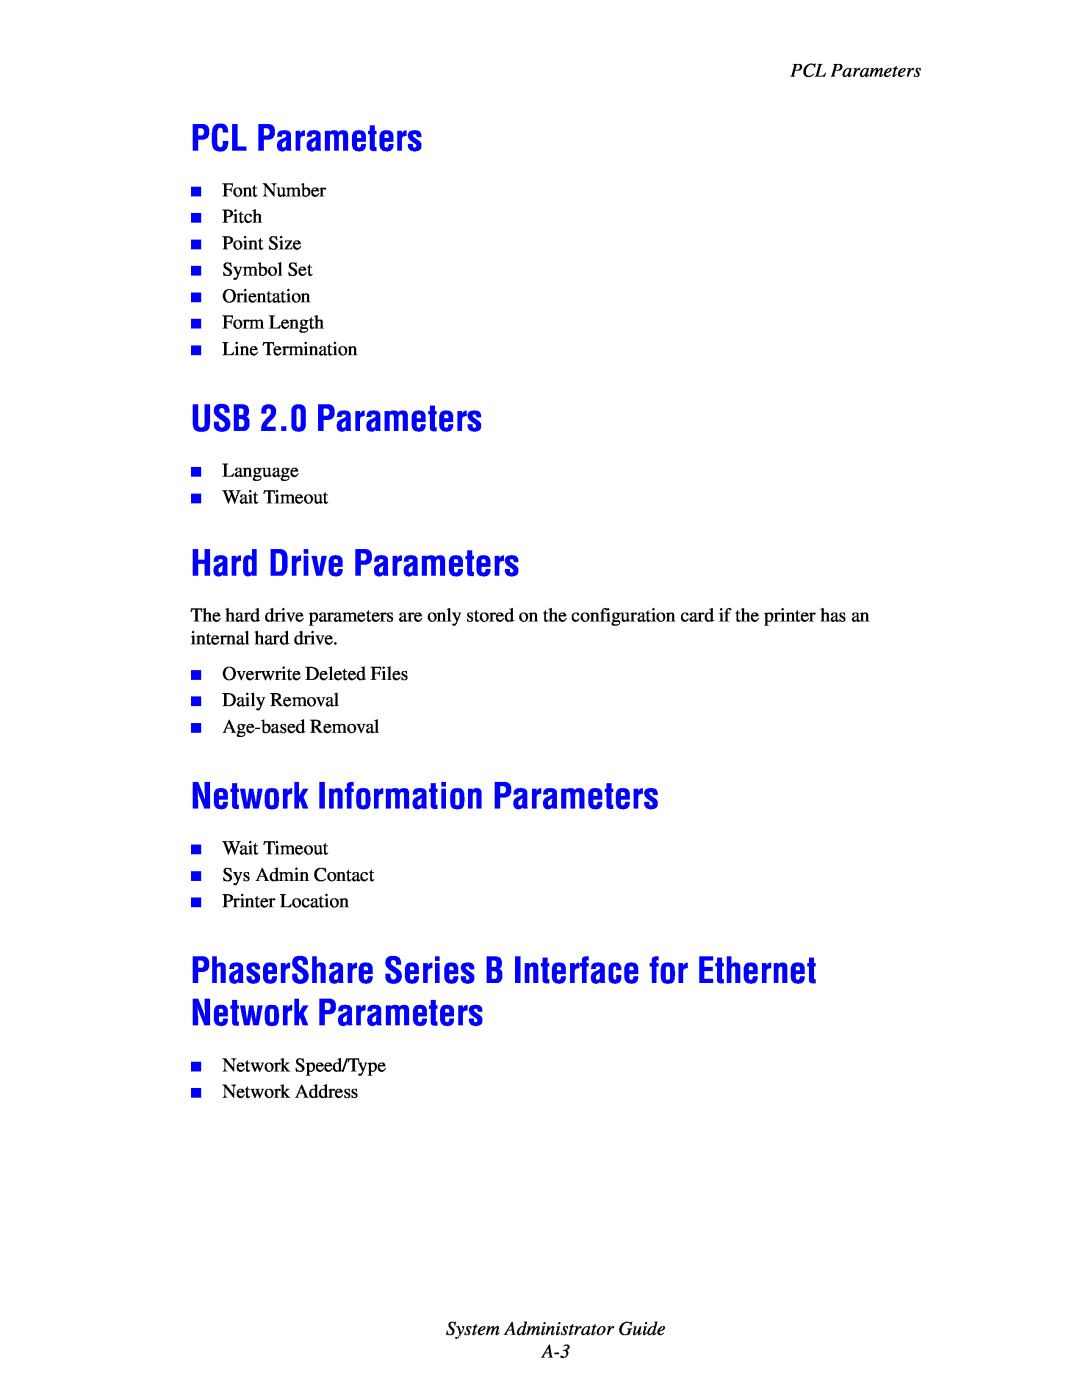 Xerox 6300, 6350, 8500, 8550 PCL Parameters, USB 2.0 Parameters, Hard Drive Parameters, Network Information Parameters 